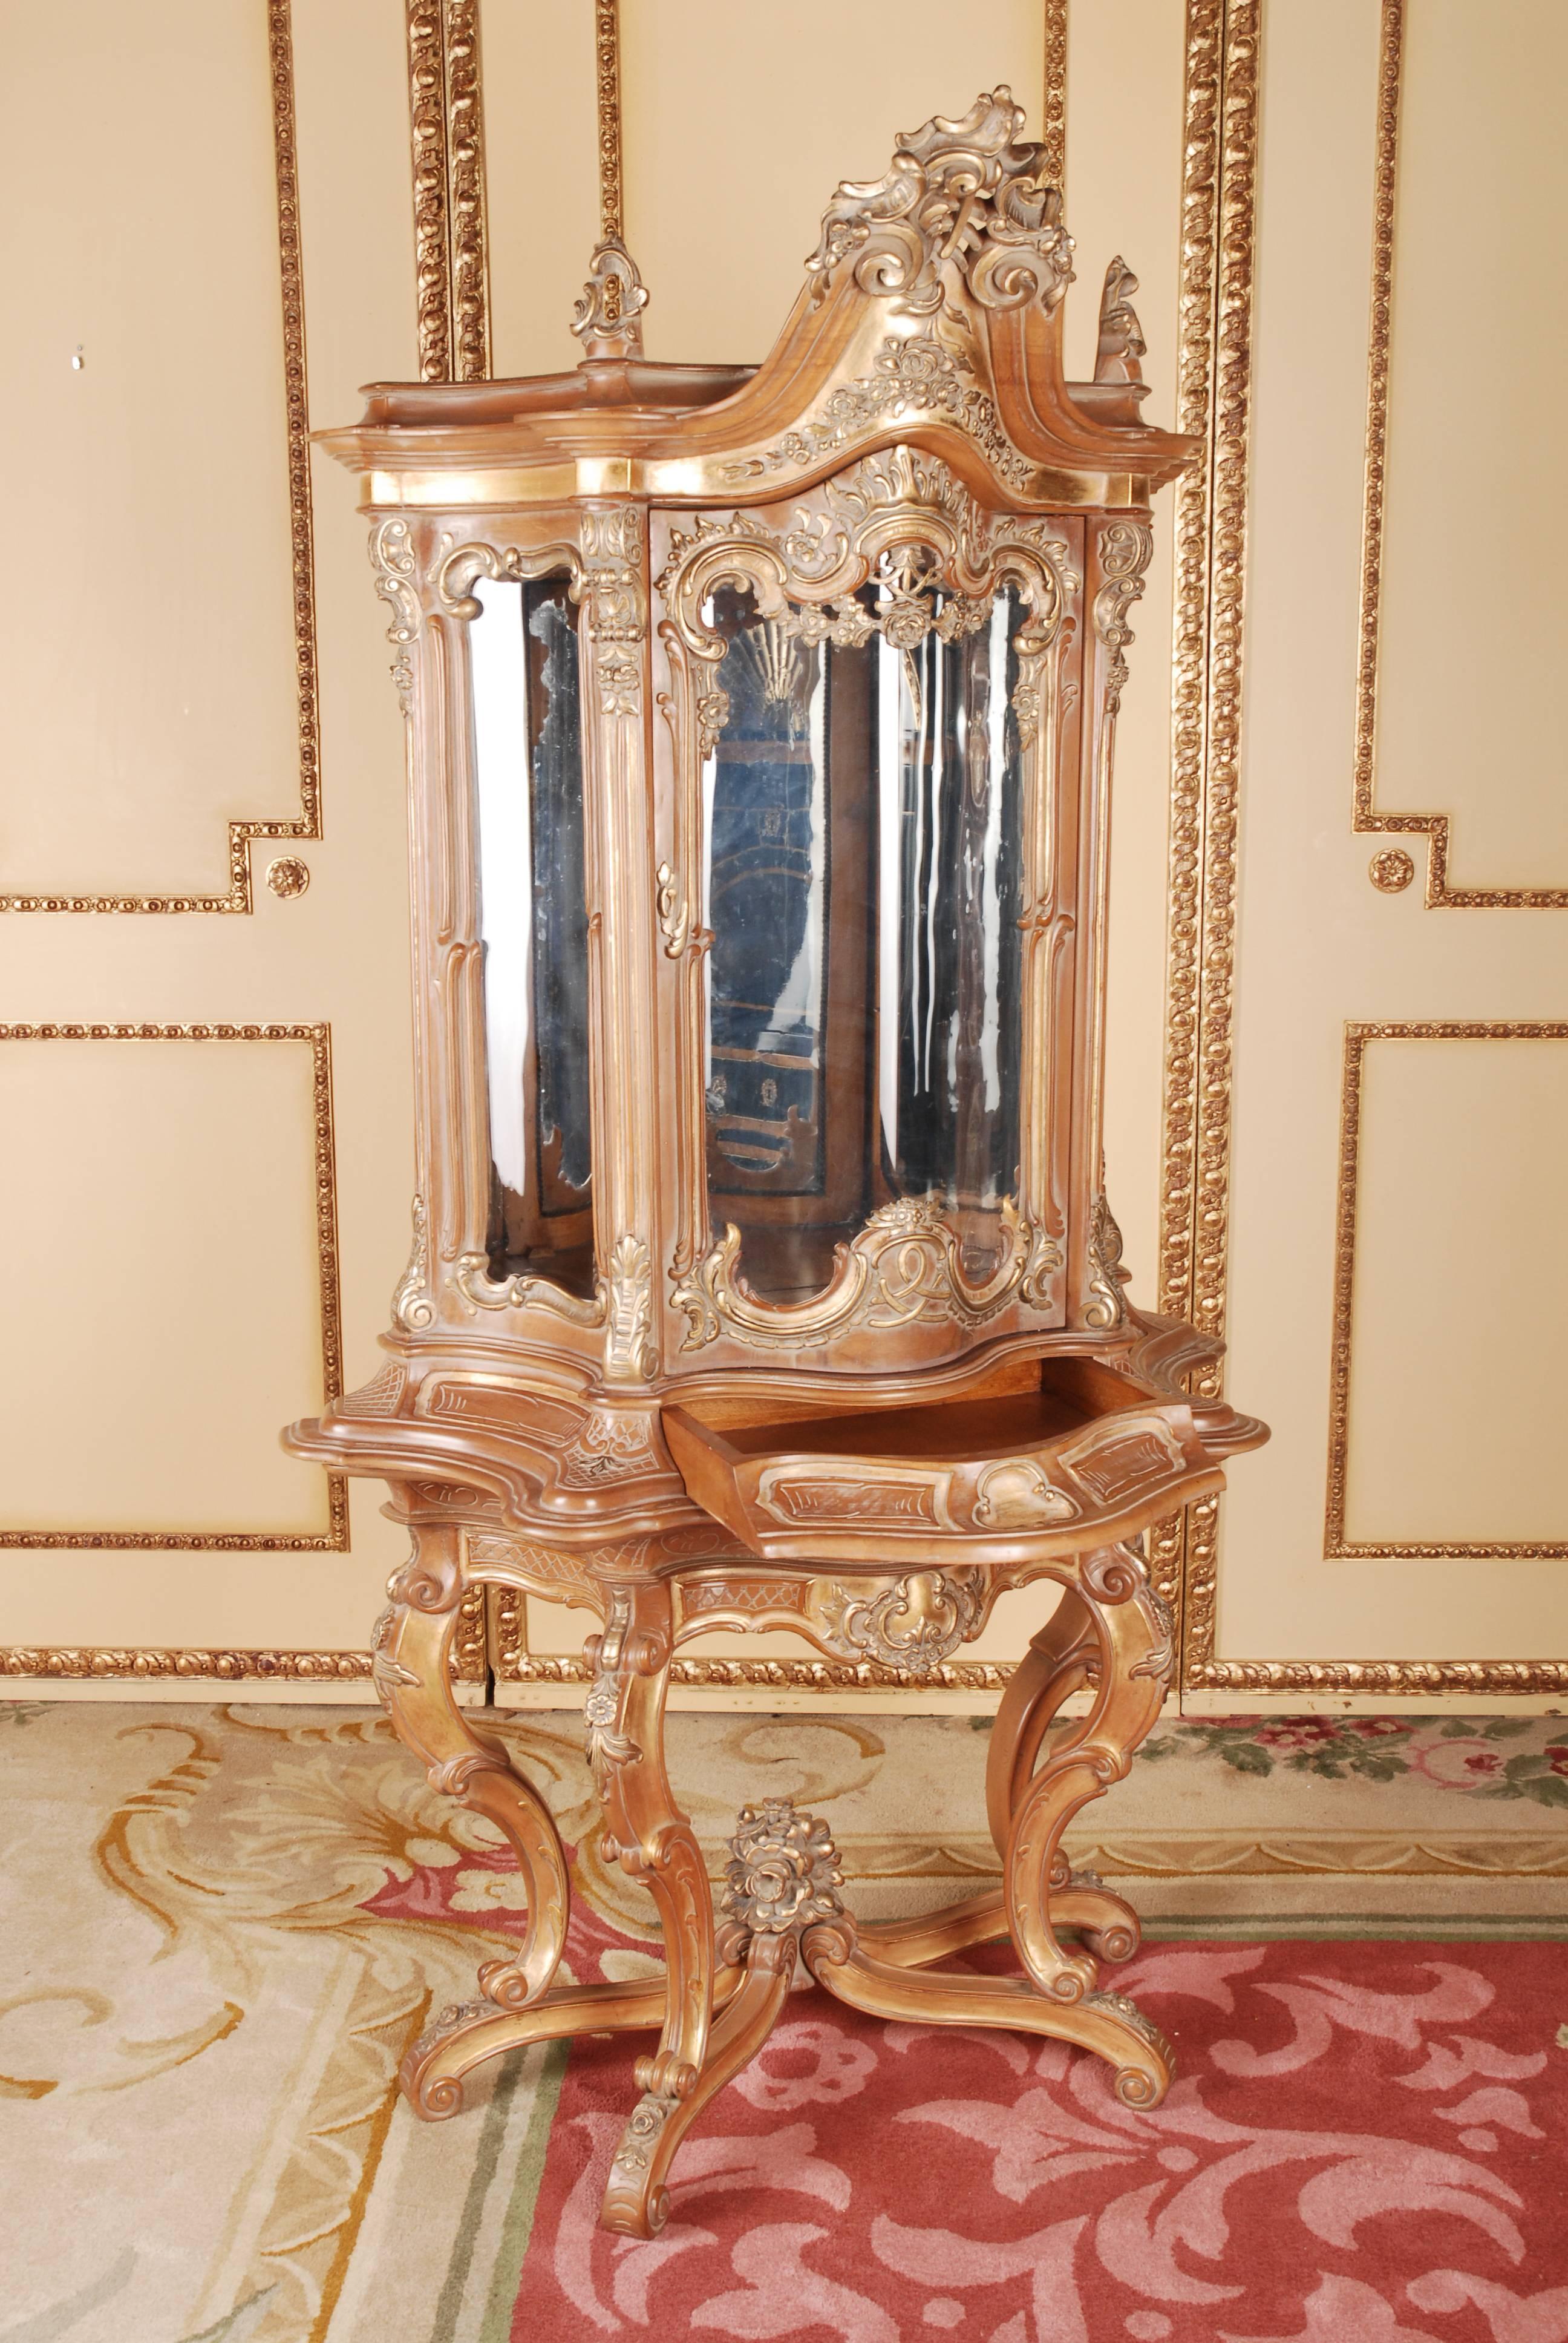 20th Century Splendid Display Cabinet in the Rococo Style (20. Jahrhundert)